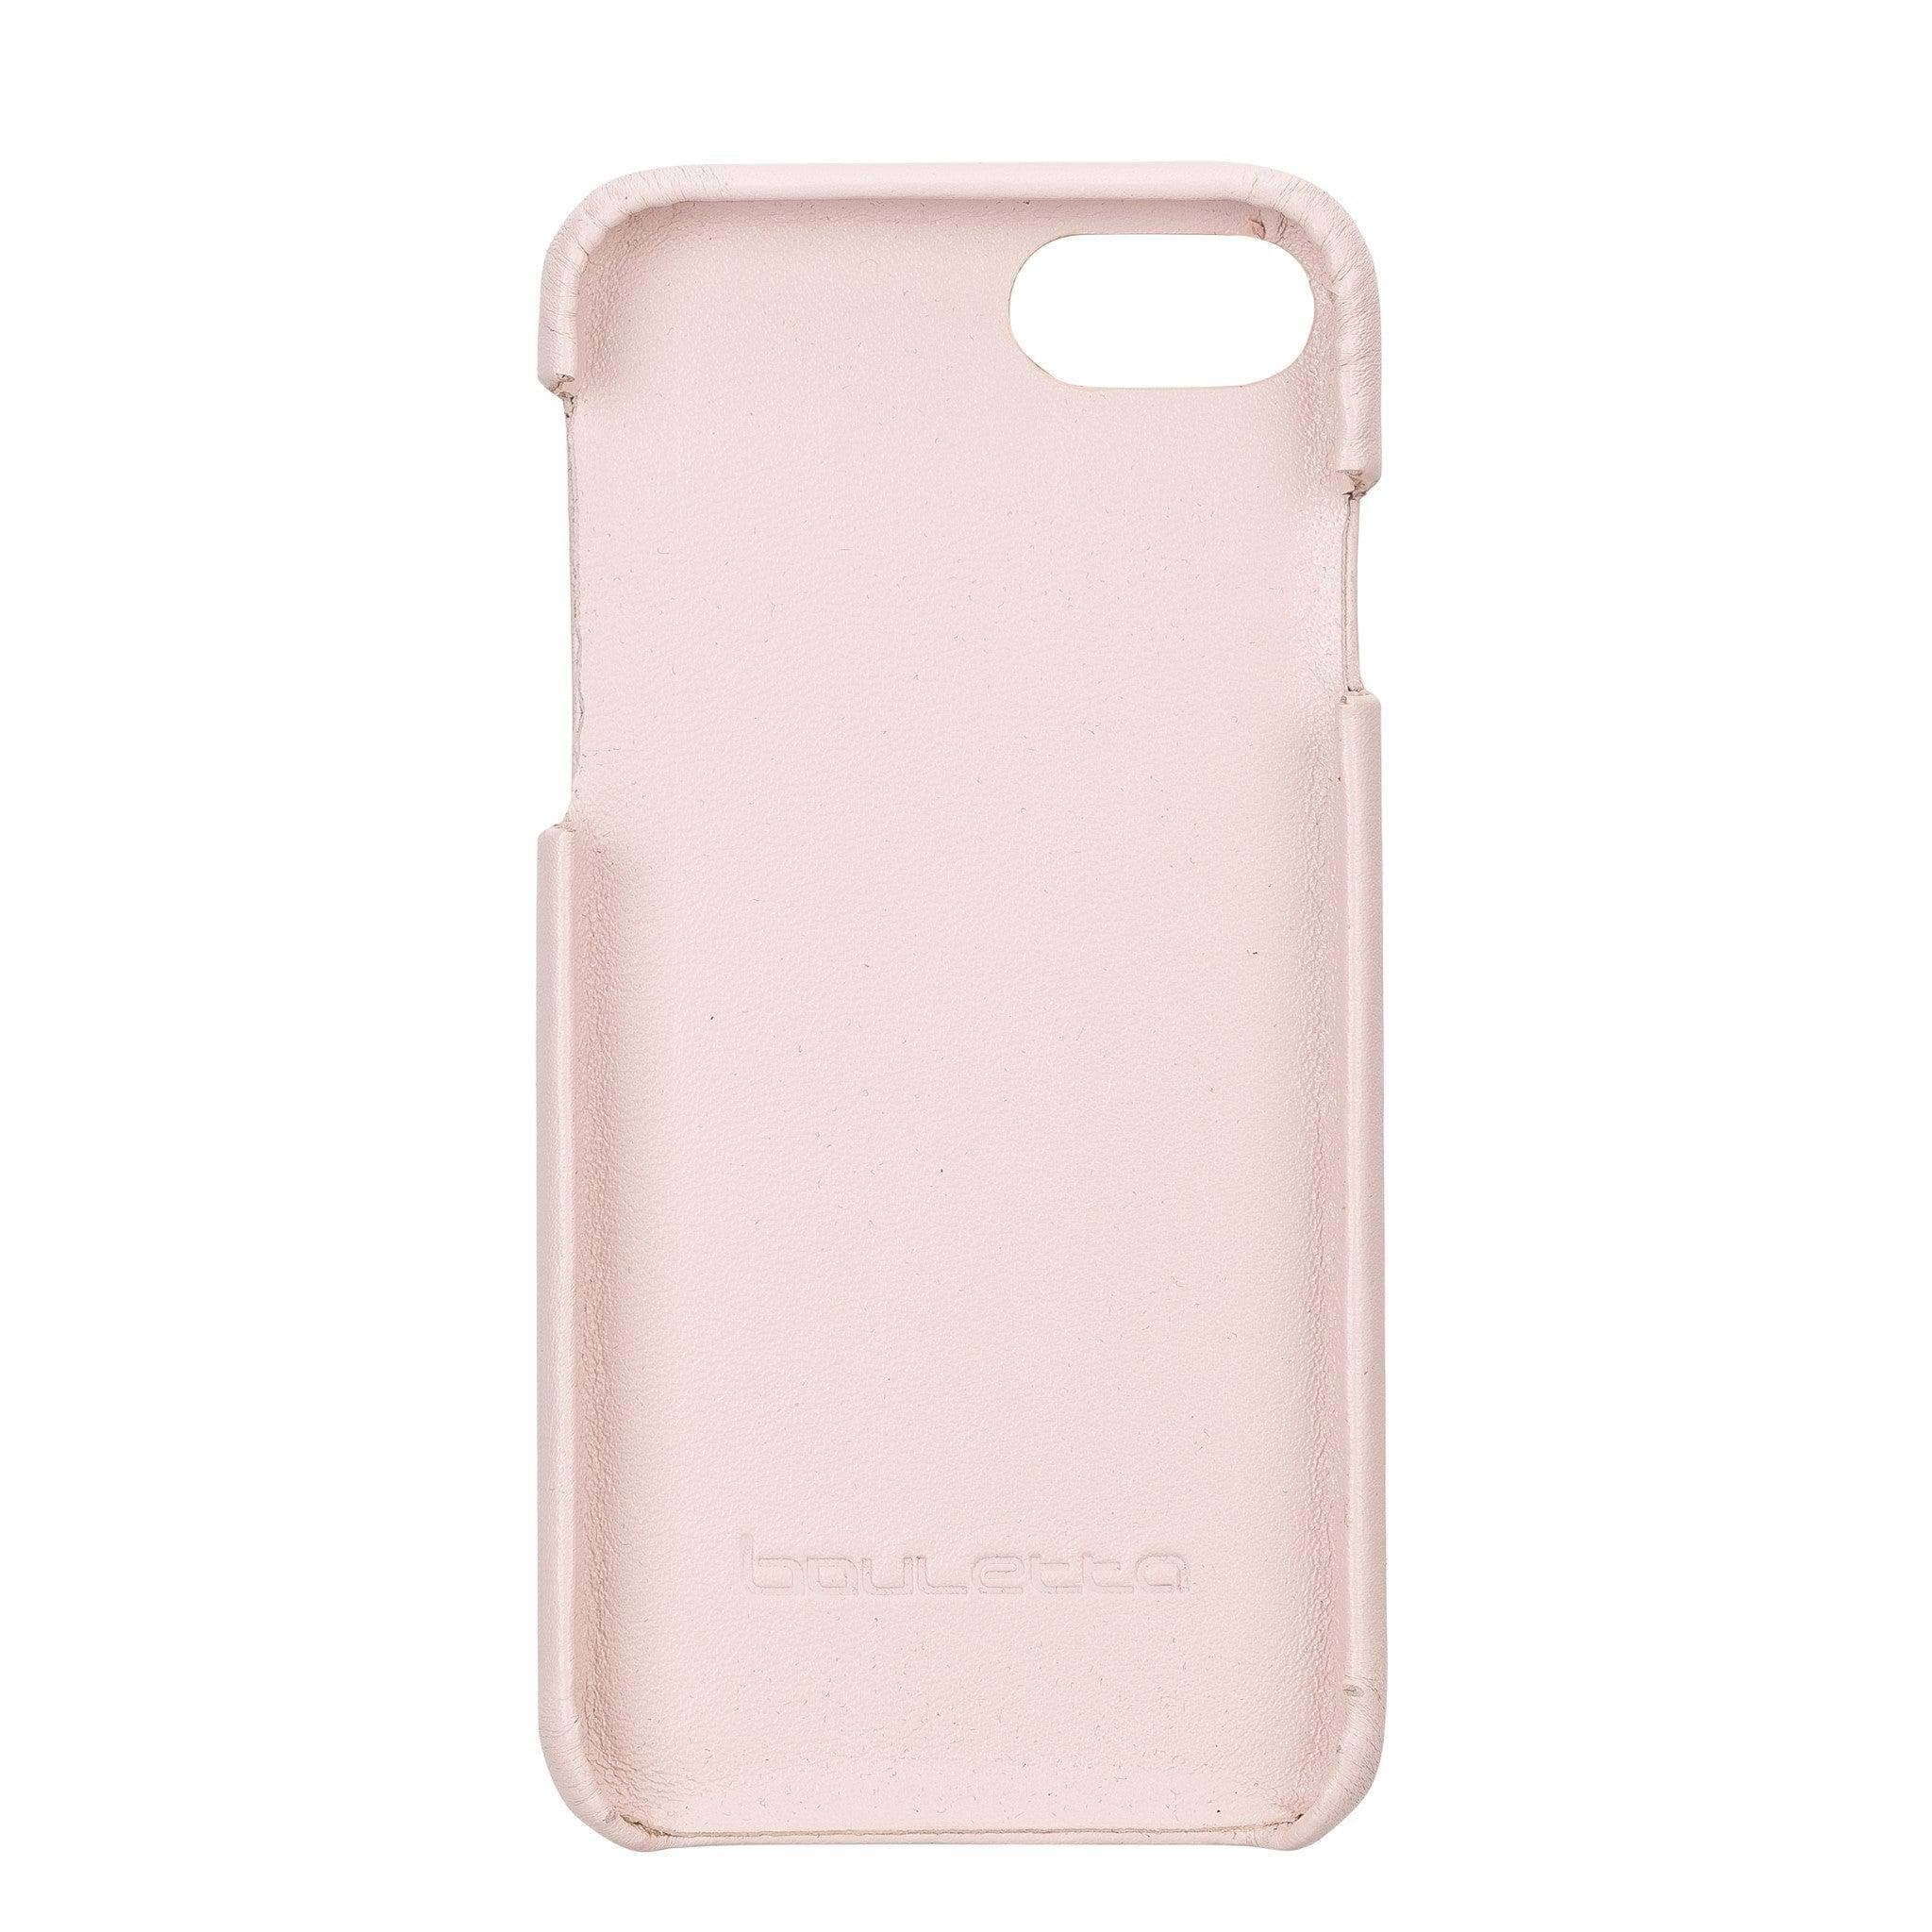 Apple iPhone 7 Series F360 Leather Back Cover Case Bouletta LTD